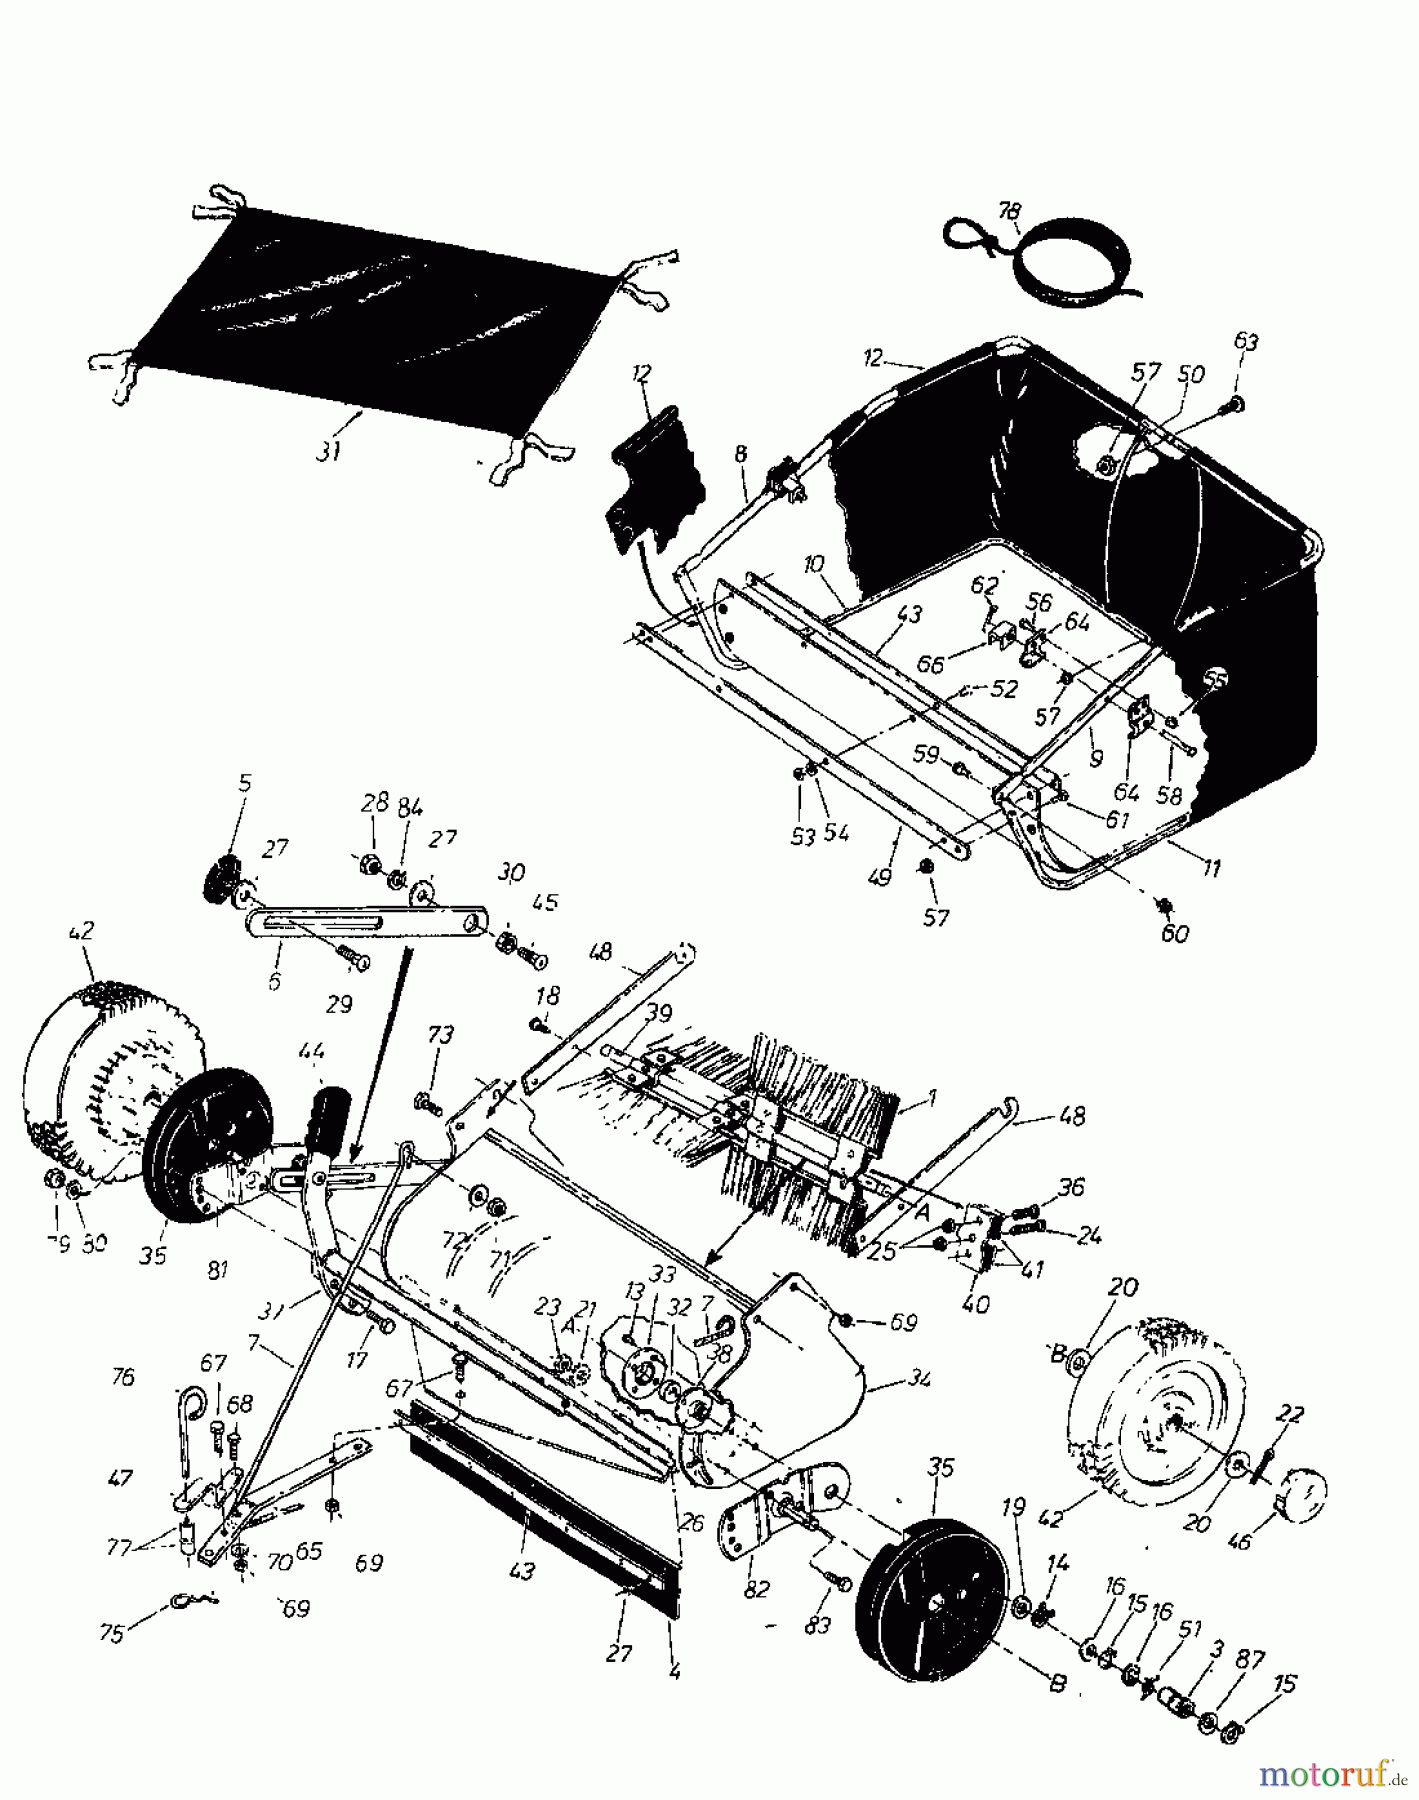  MTD Accessories Accessories garden and lawn tractors Sweeper Flott-HD 042-0172-9  (1989) Basic machine